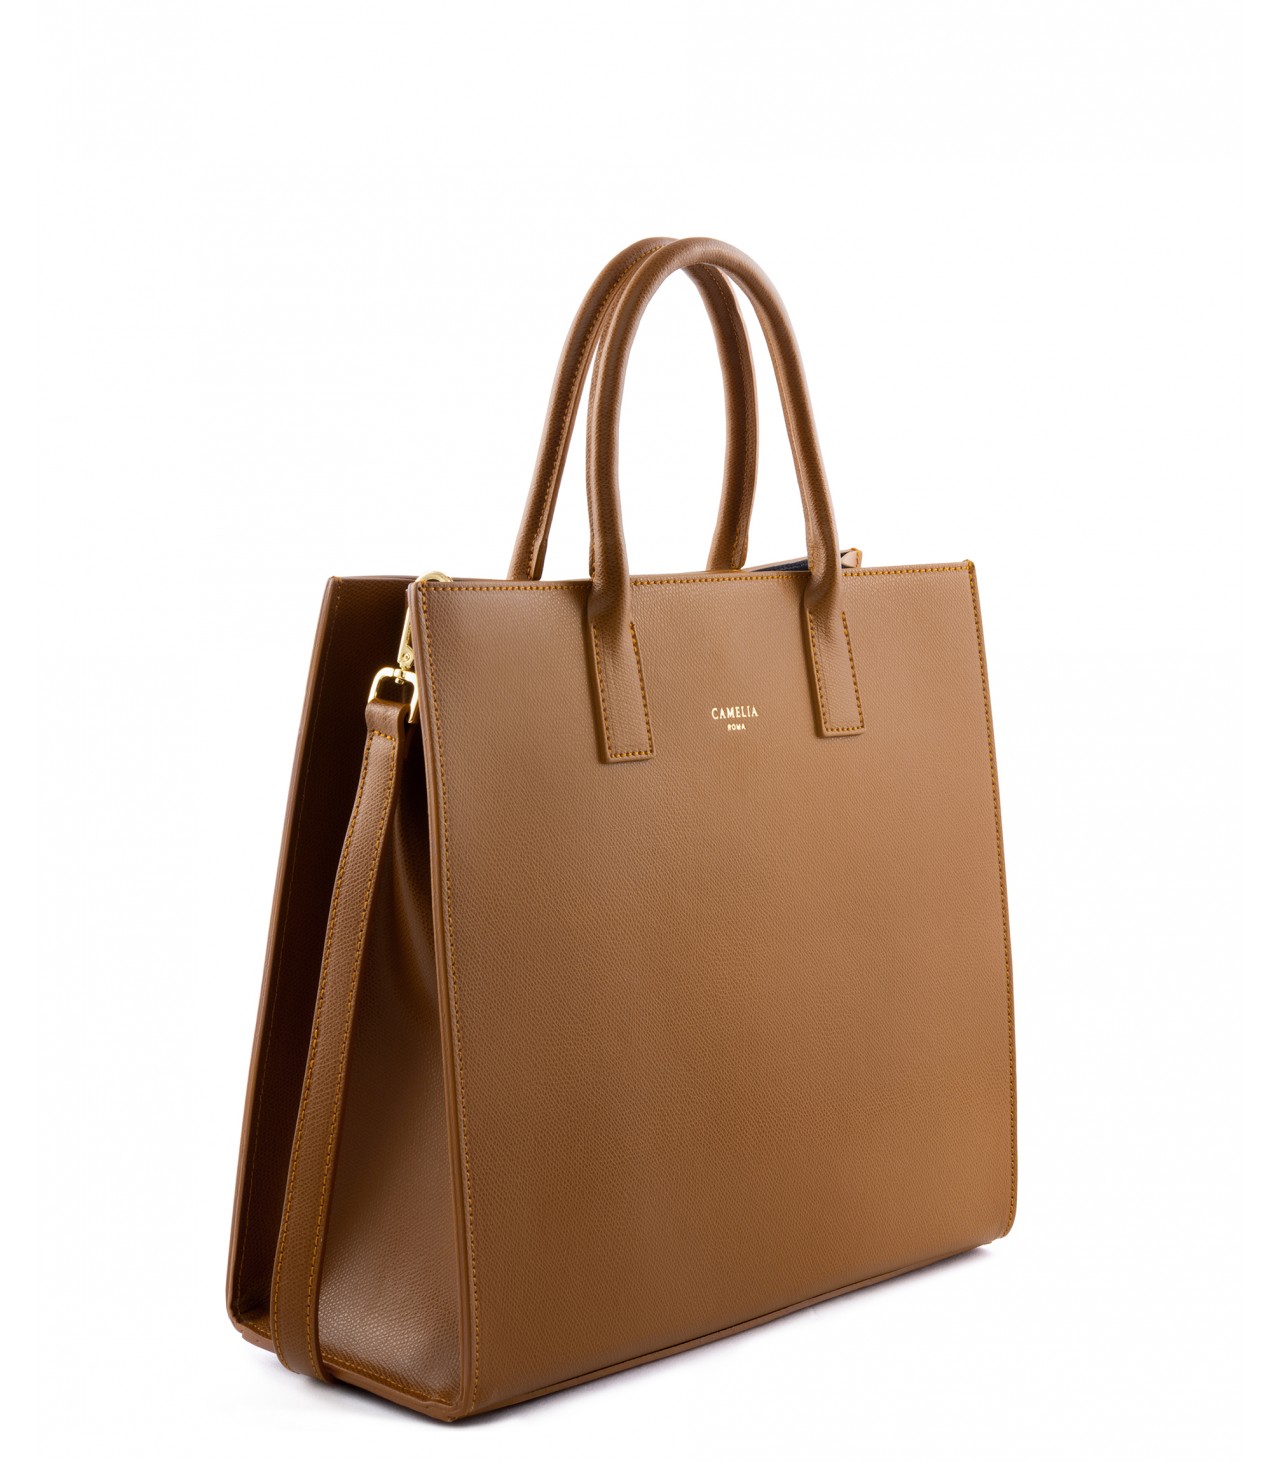 Tuscany Leather Camelia Leather handbag Champagne: Handbags: Amazon.com